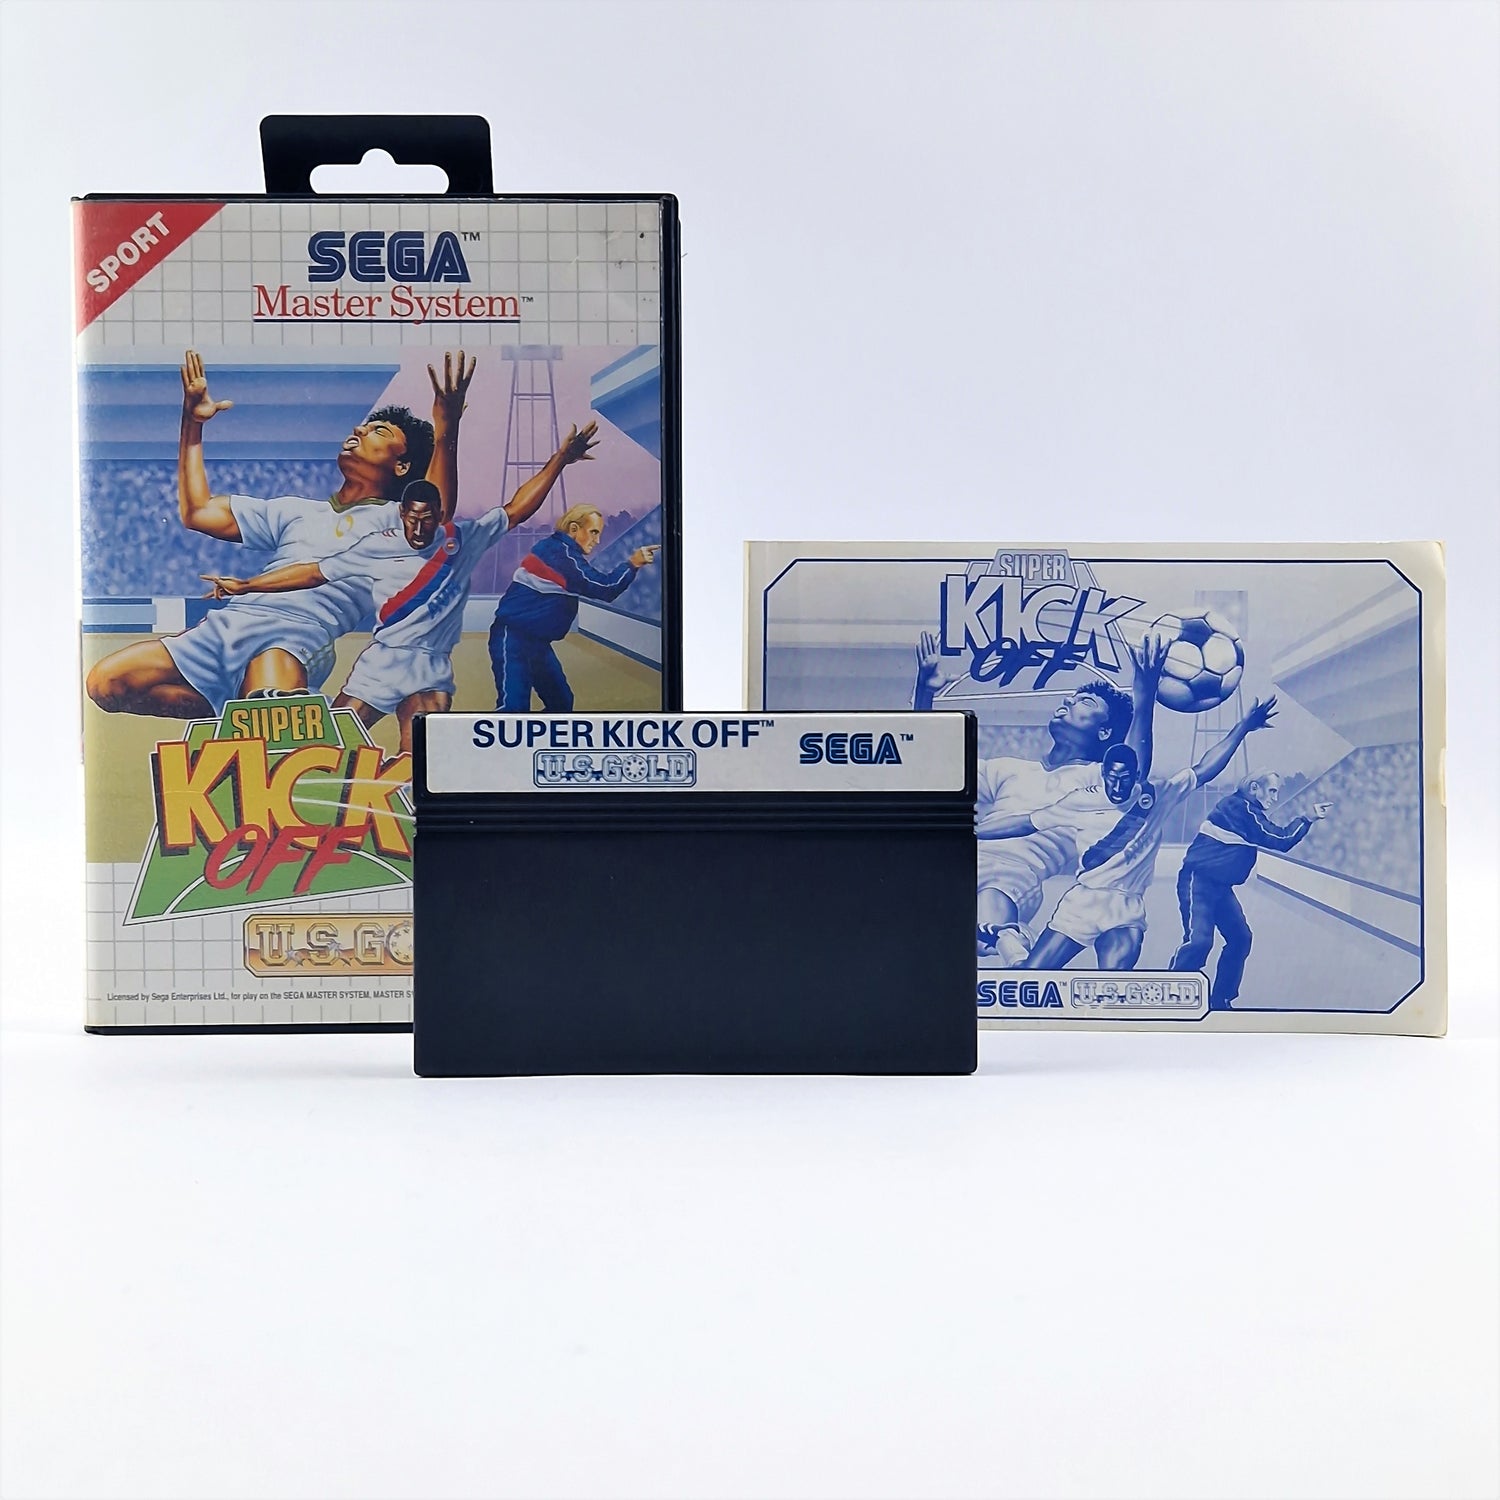 Sega Master System Game: Super Kick off - OVP Instructions Cartridge - Good